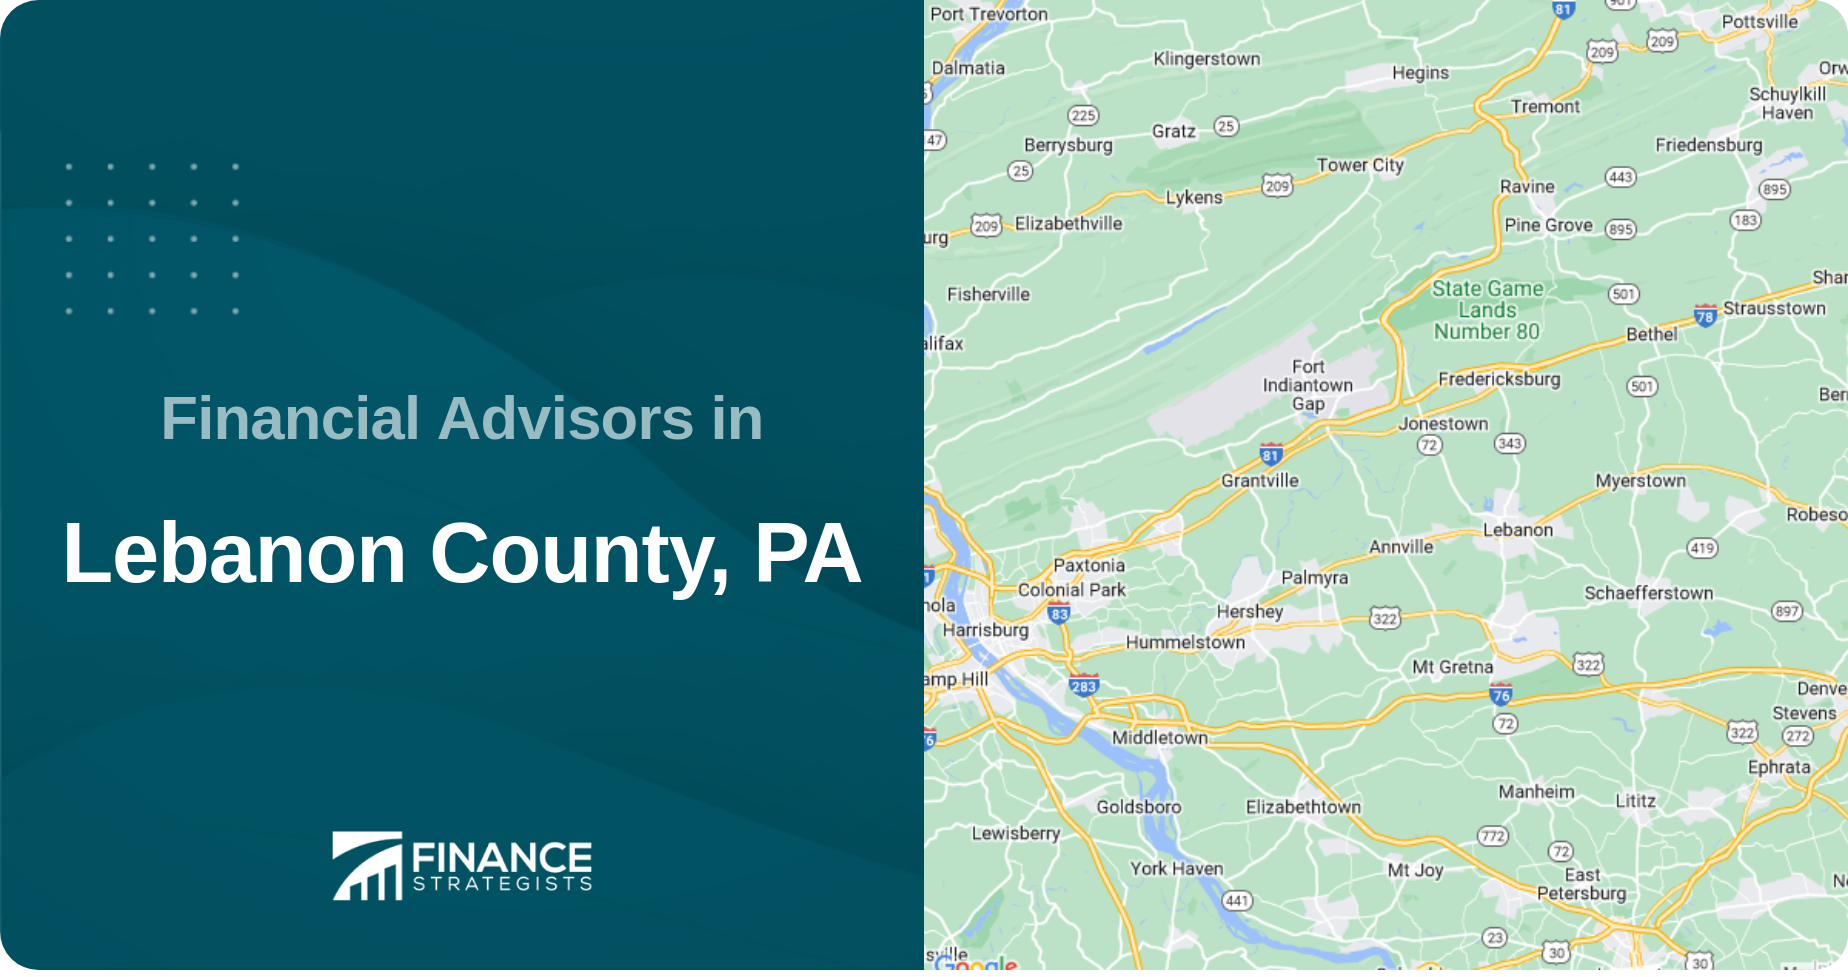 Financial Advisors in Lebanon County, PA